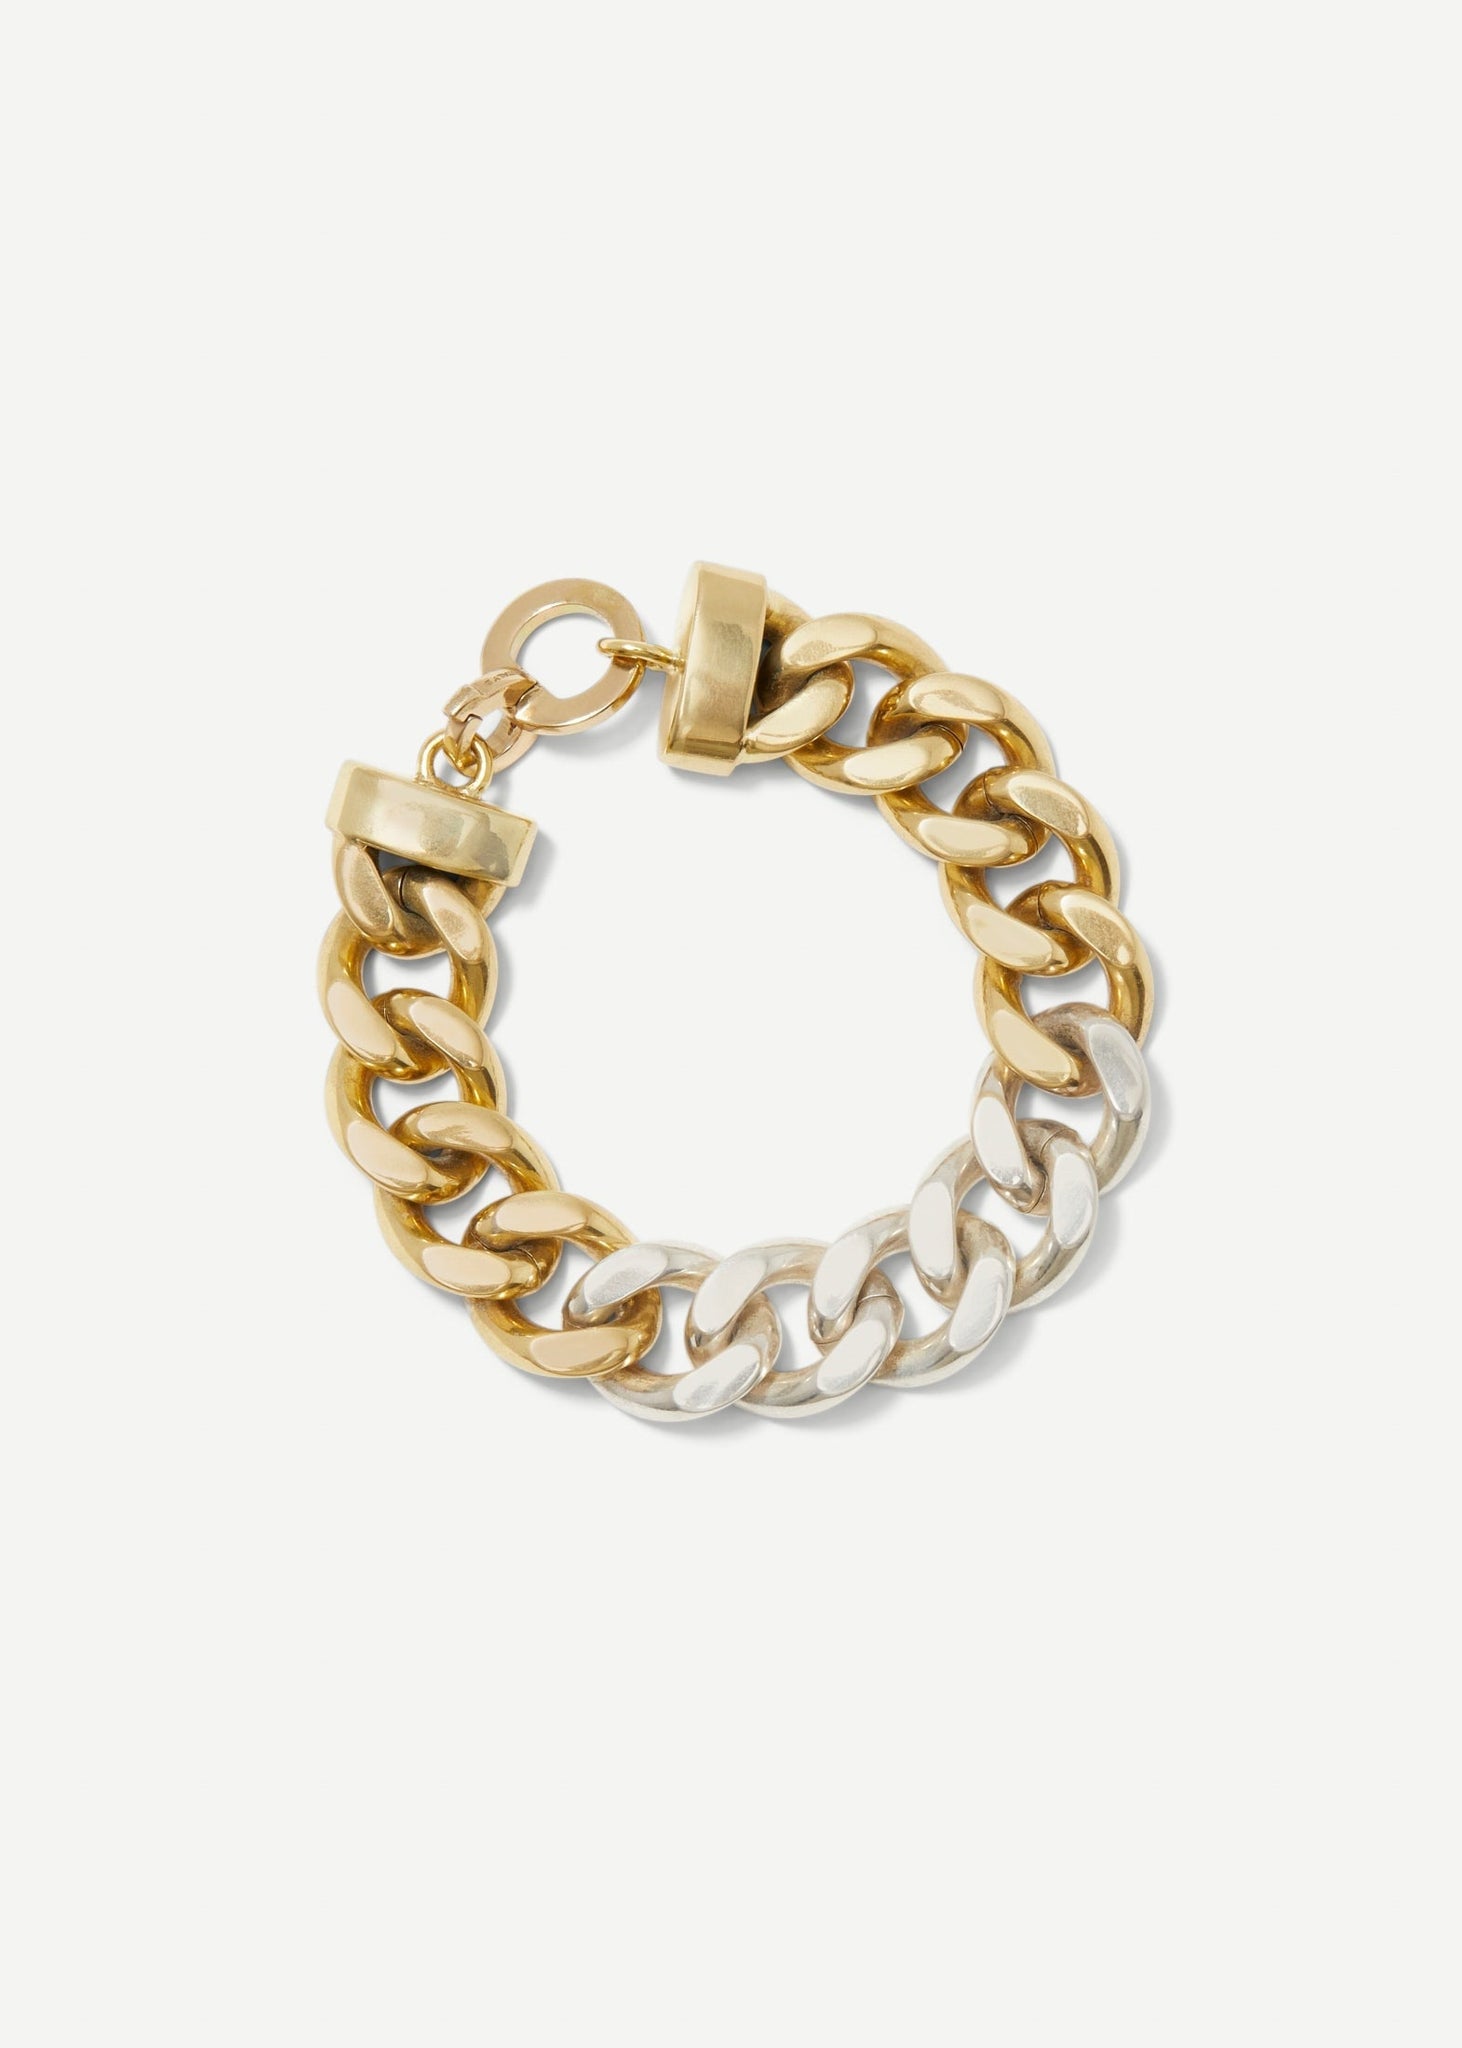 Molded Chain Bracelet Maxi - Bracelets - Cornelia Webb - 1